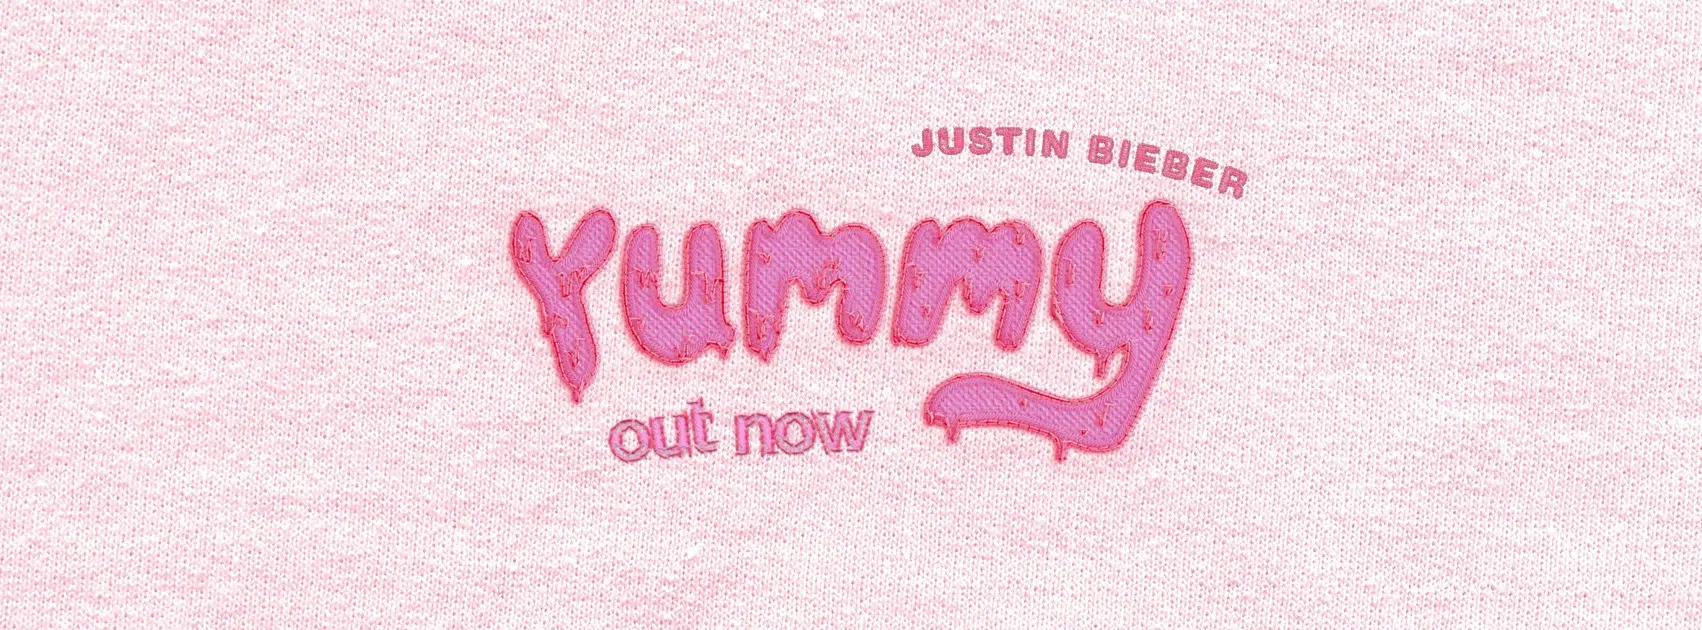 (Music Video) Justin Bieber - Yummy 